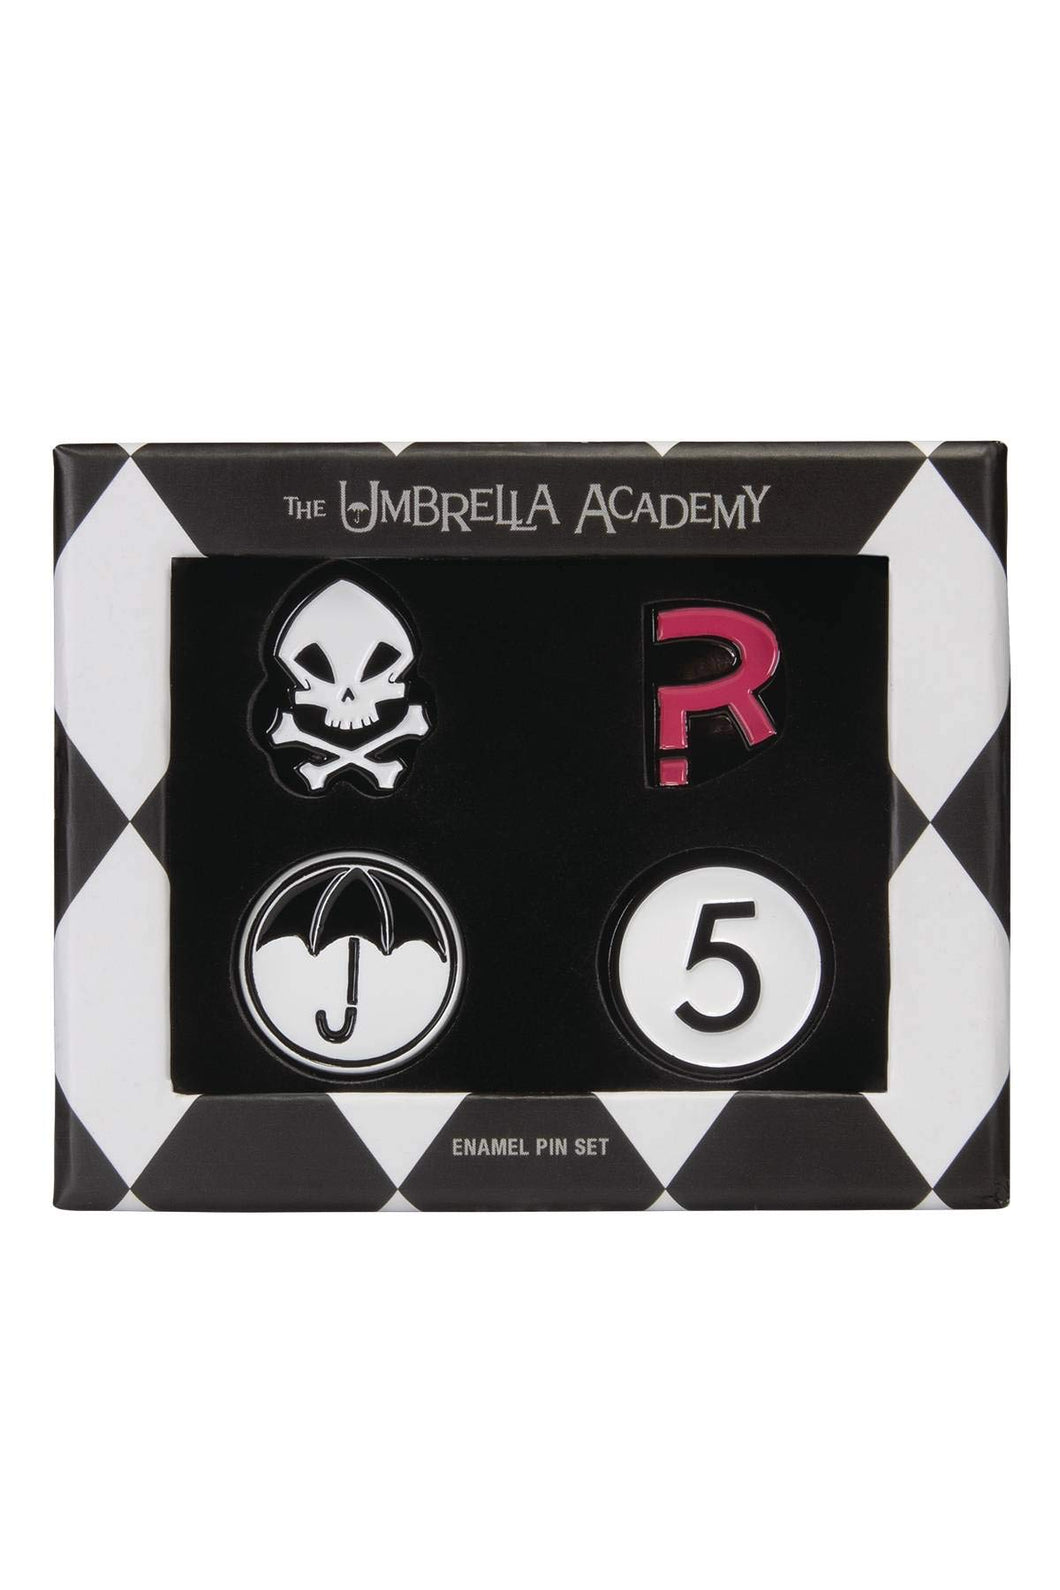 Umbrella Academy Pin Set